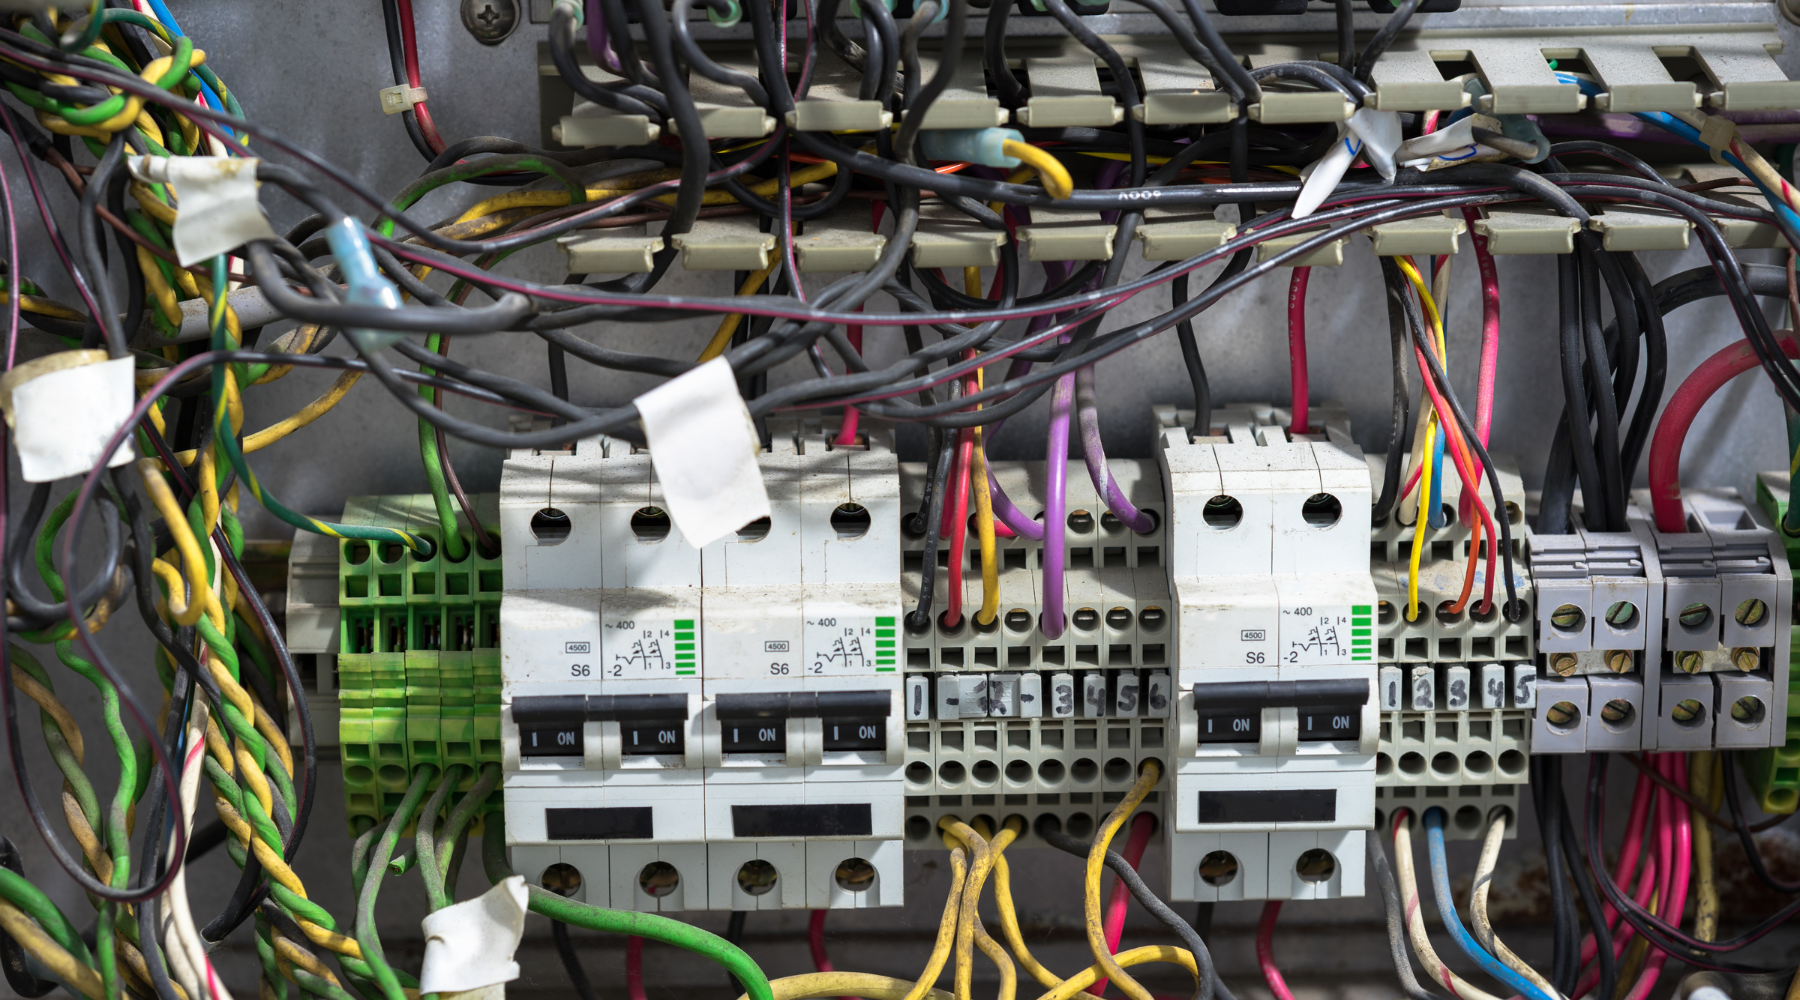 Overloaded: Electrical Hazards and Practices - CM Regent